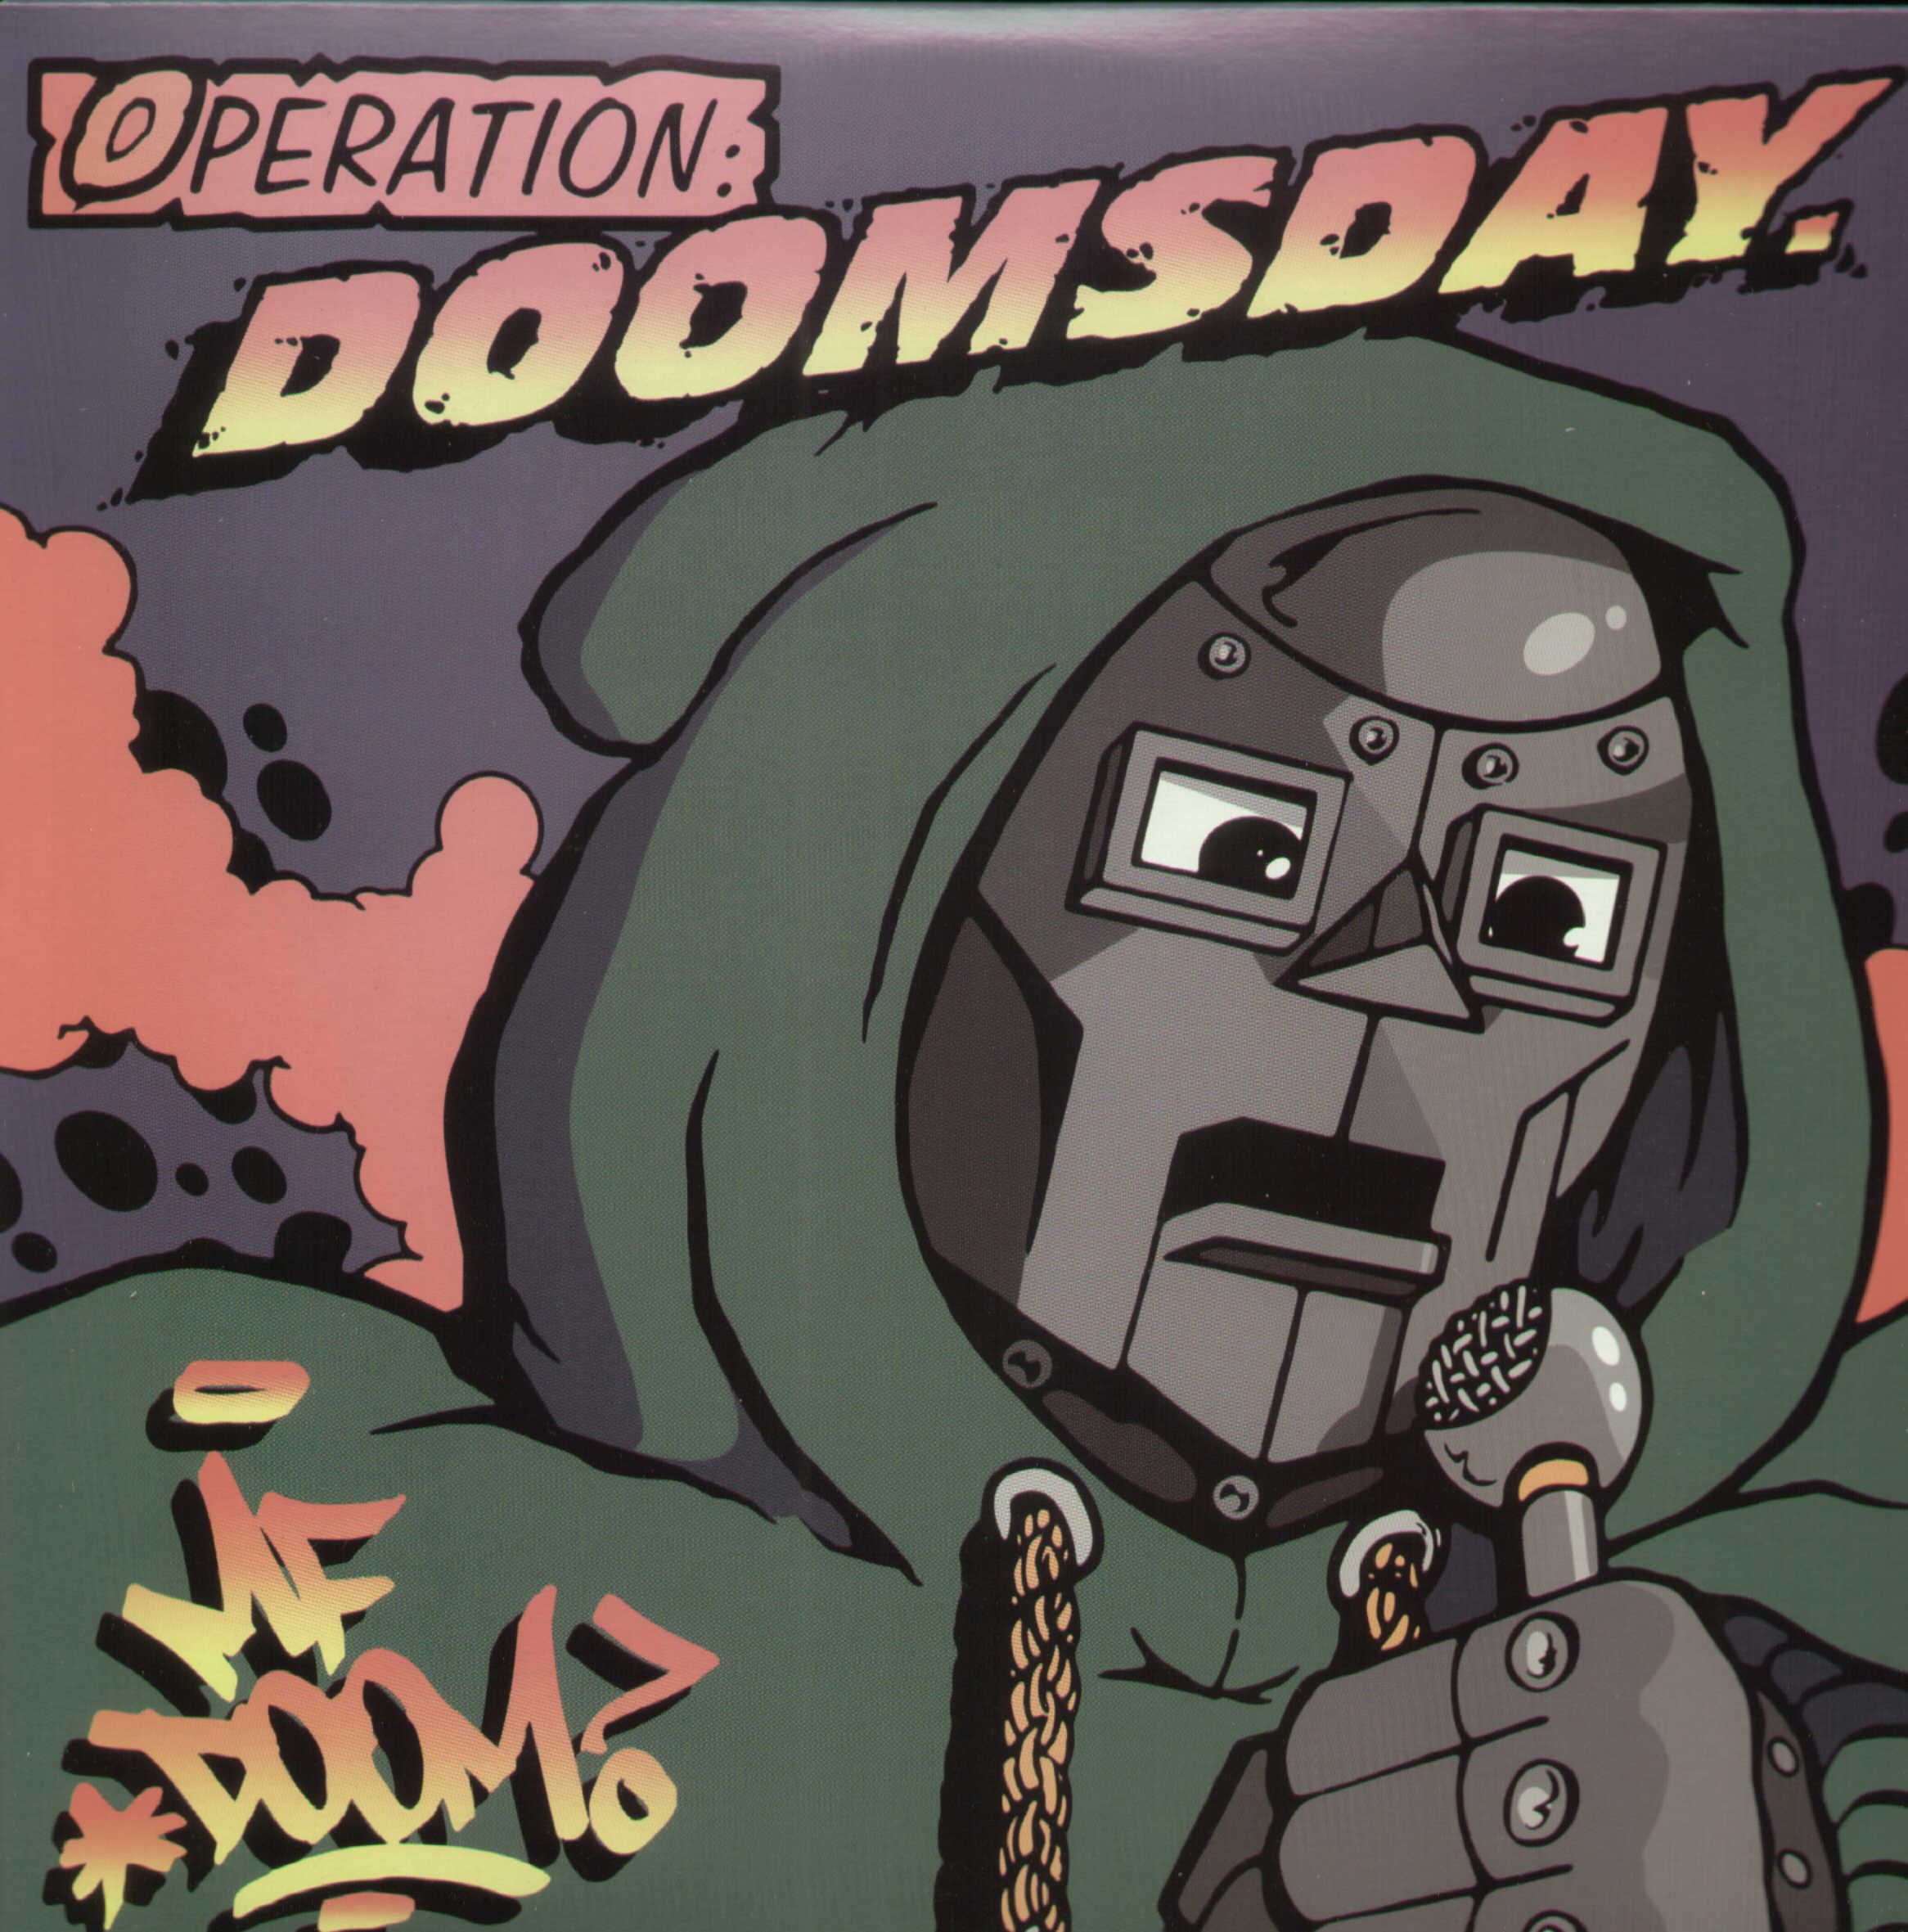 MF Doom - Doomsday